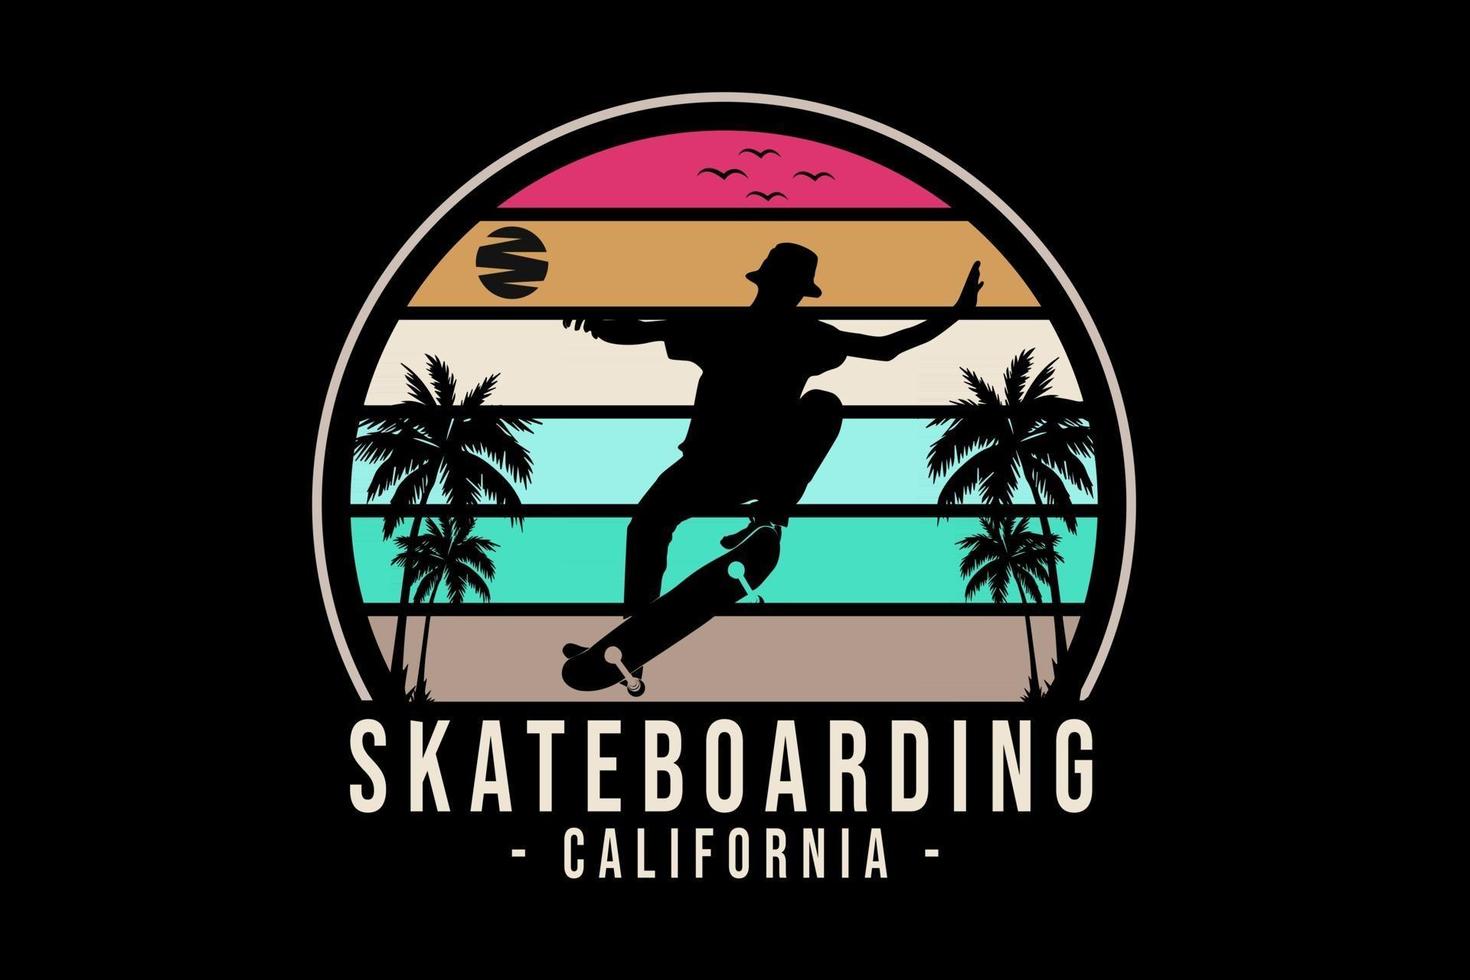 skateboard Kalifornien silhuett design vektor